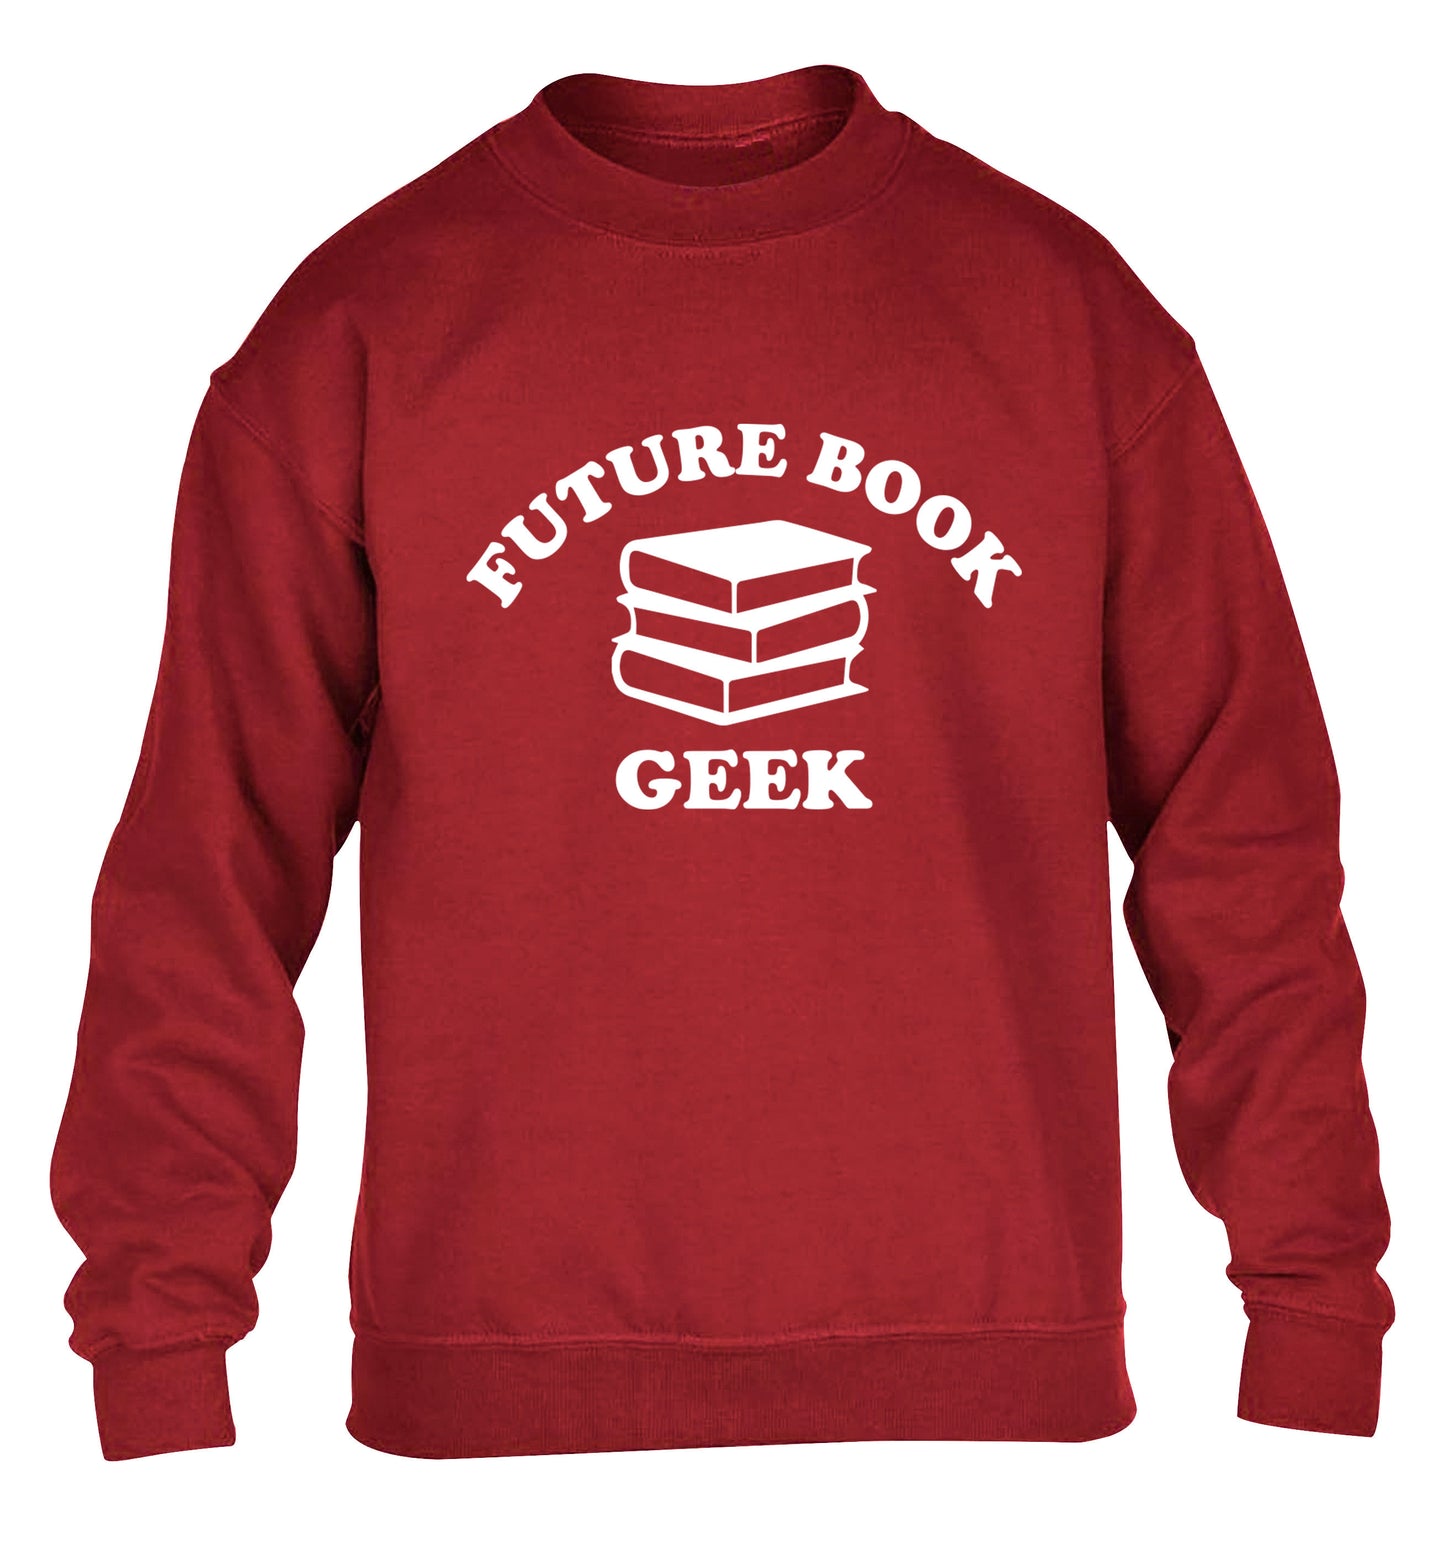 Future book geek children's grey sweater 12-14 Years